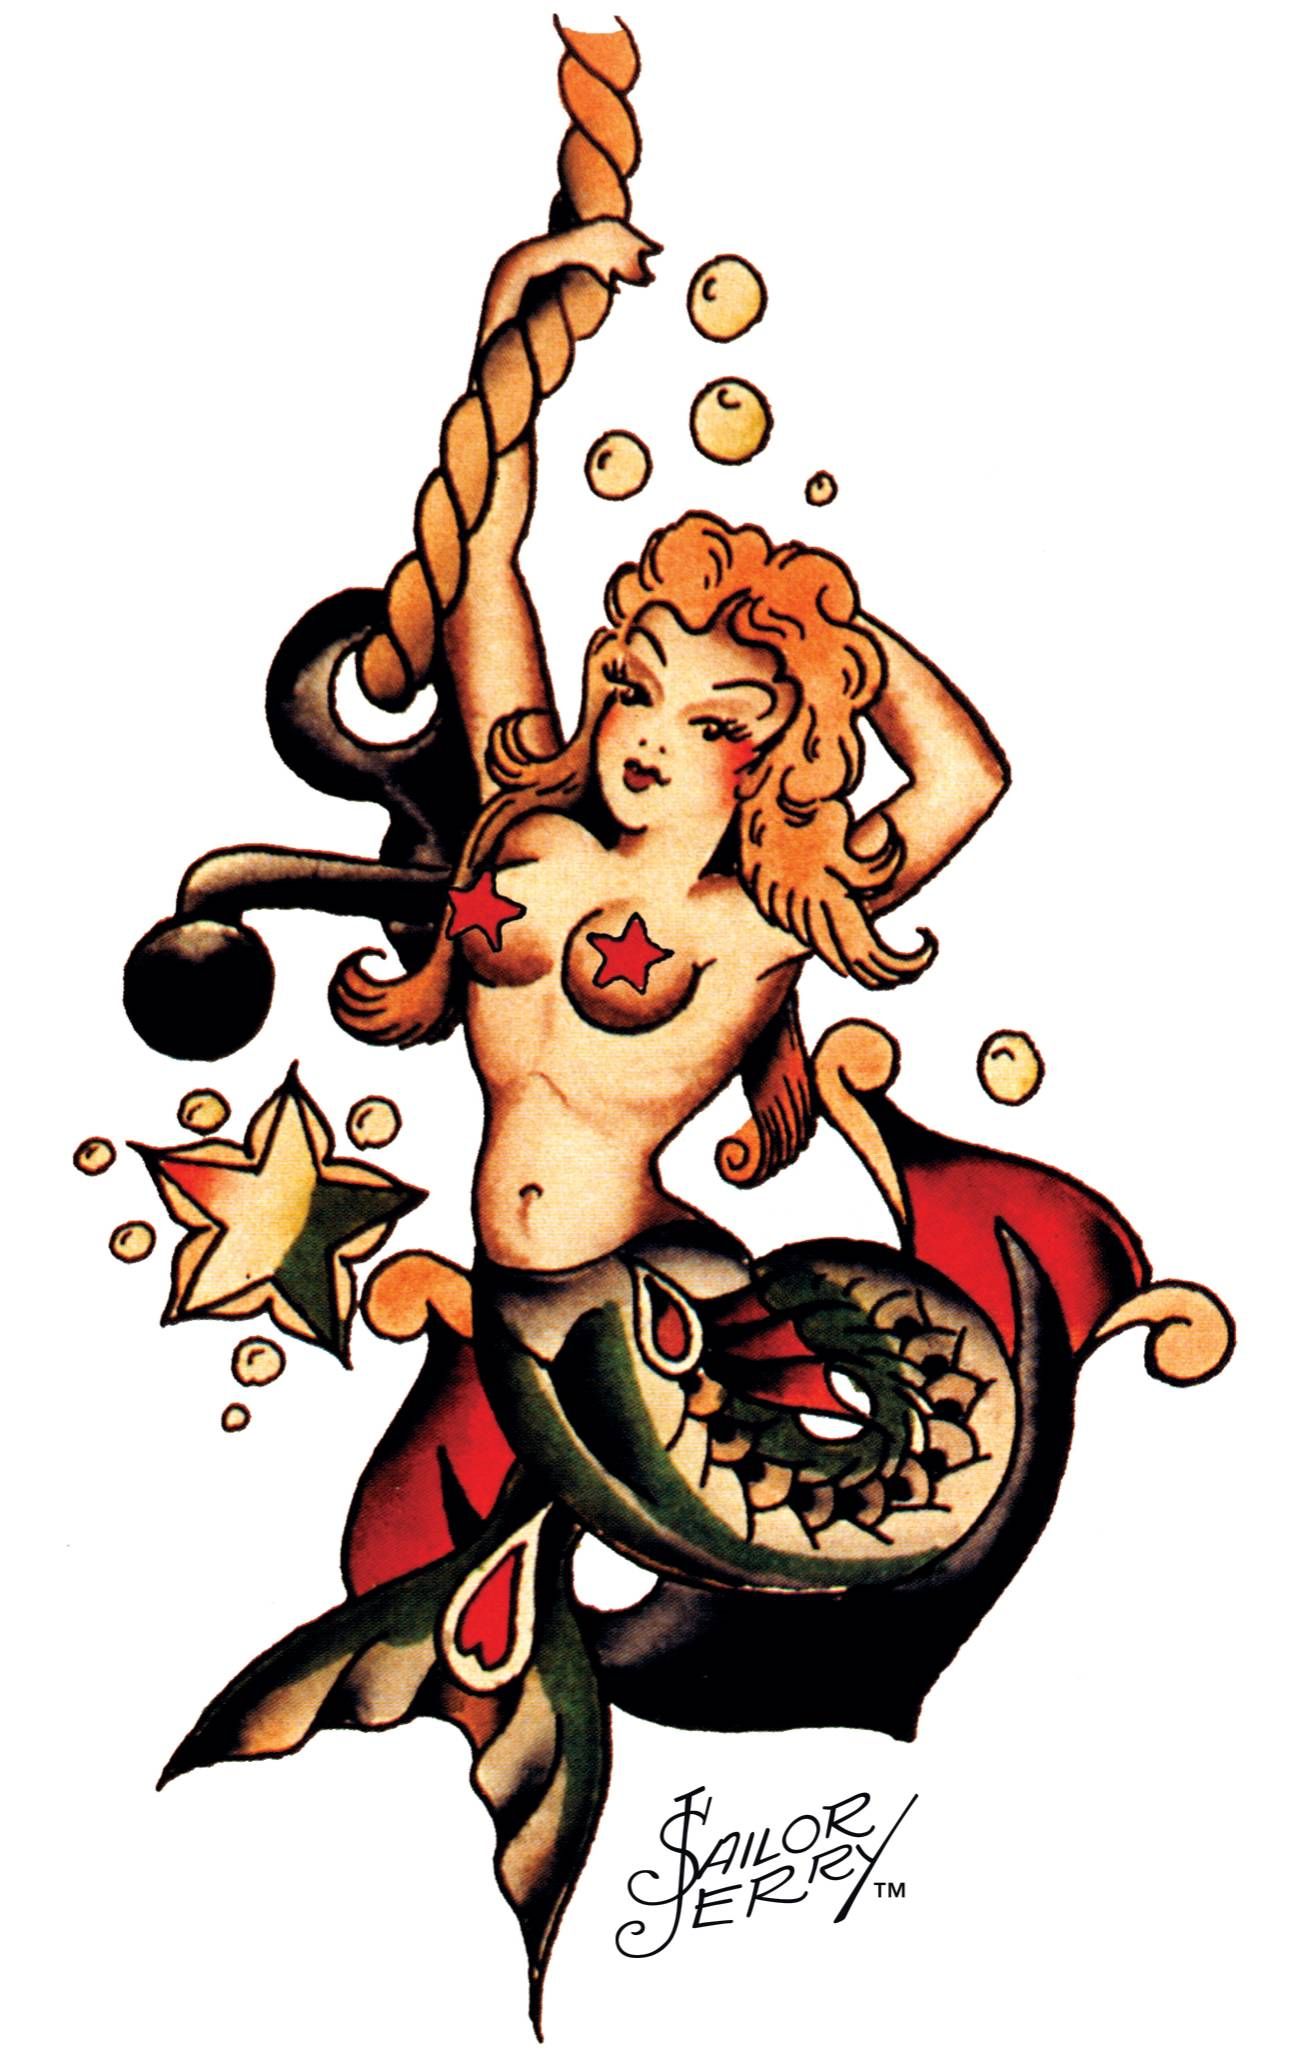 Sailor Jerry Mermaid Tattoo Designs